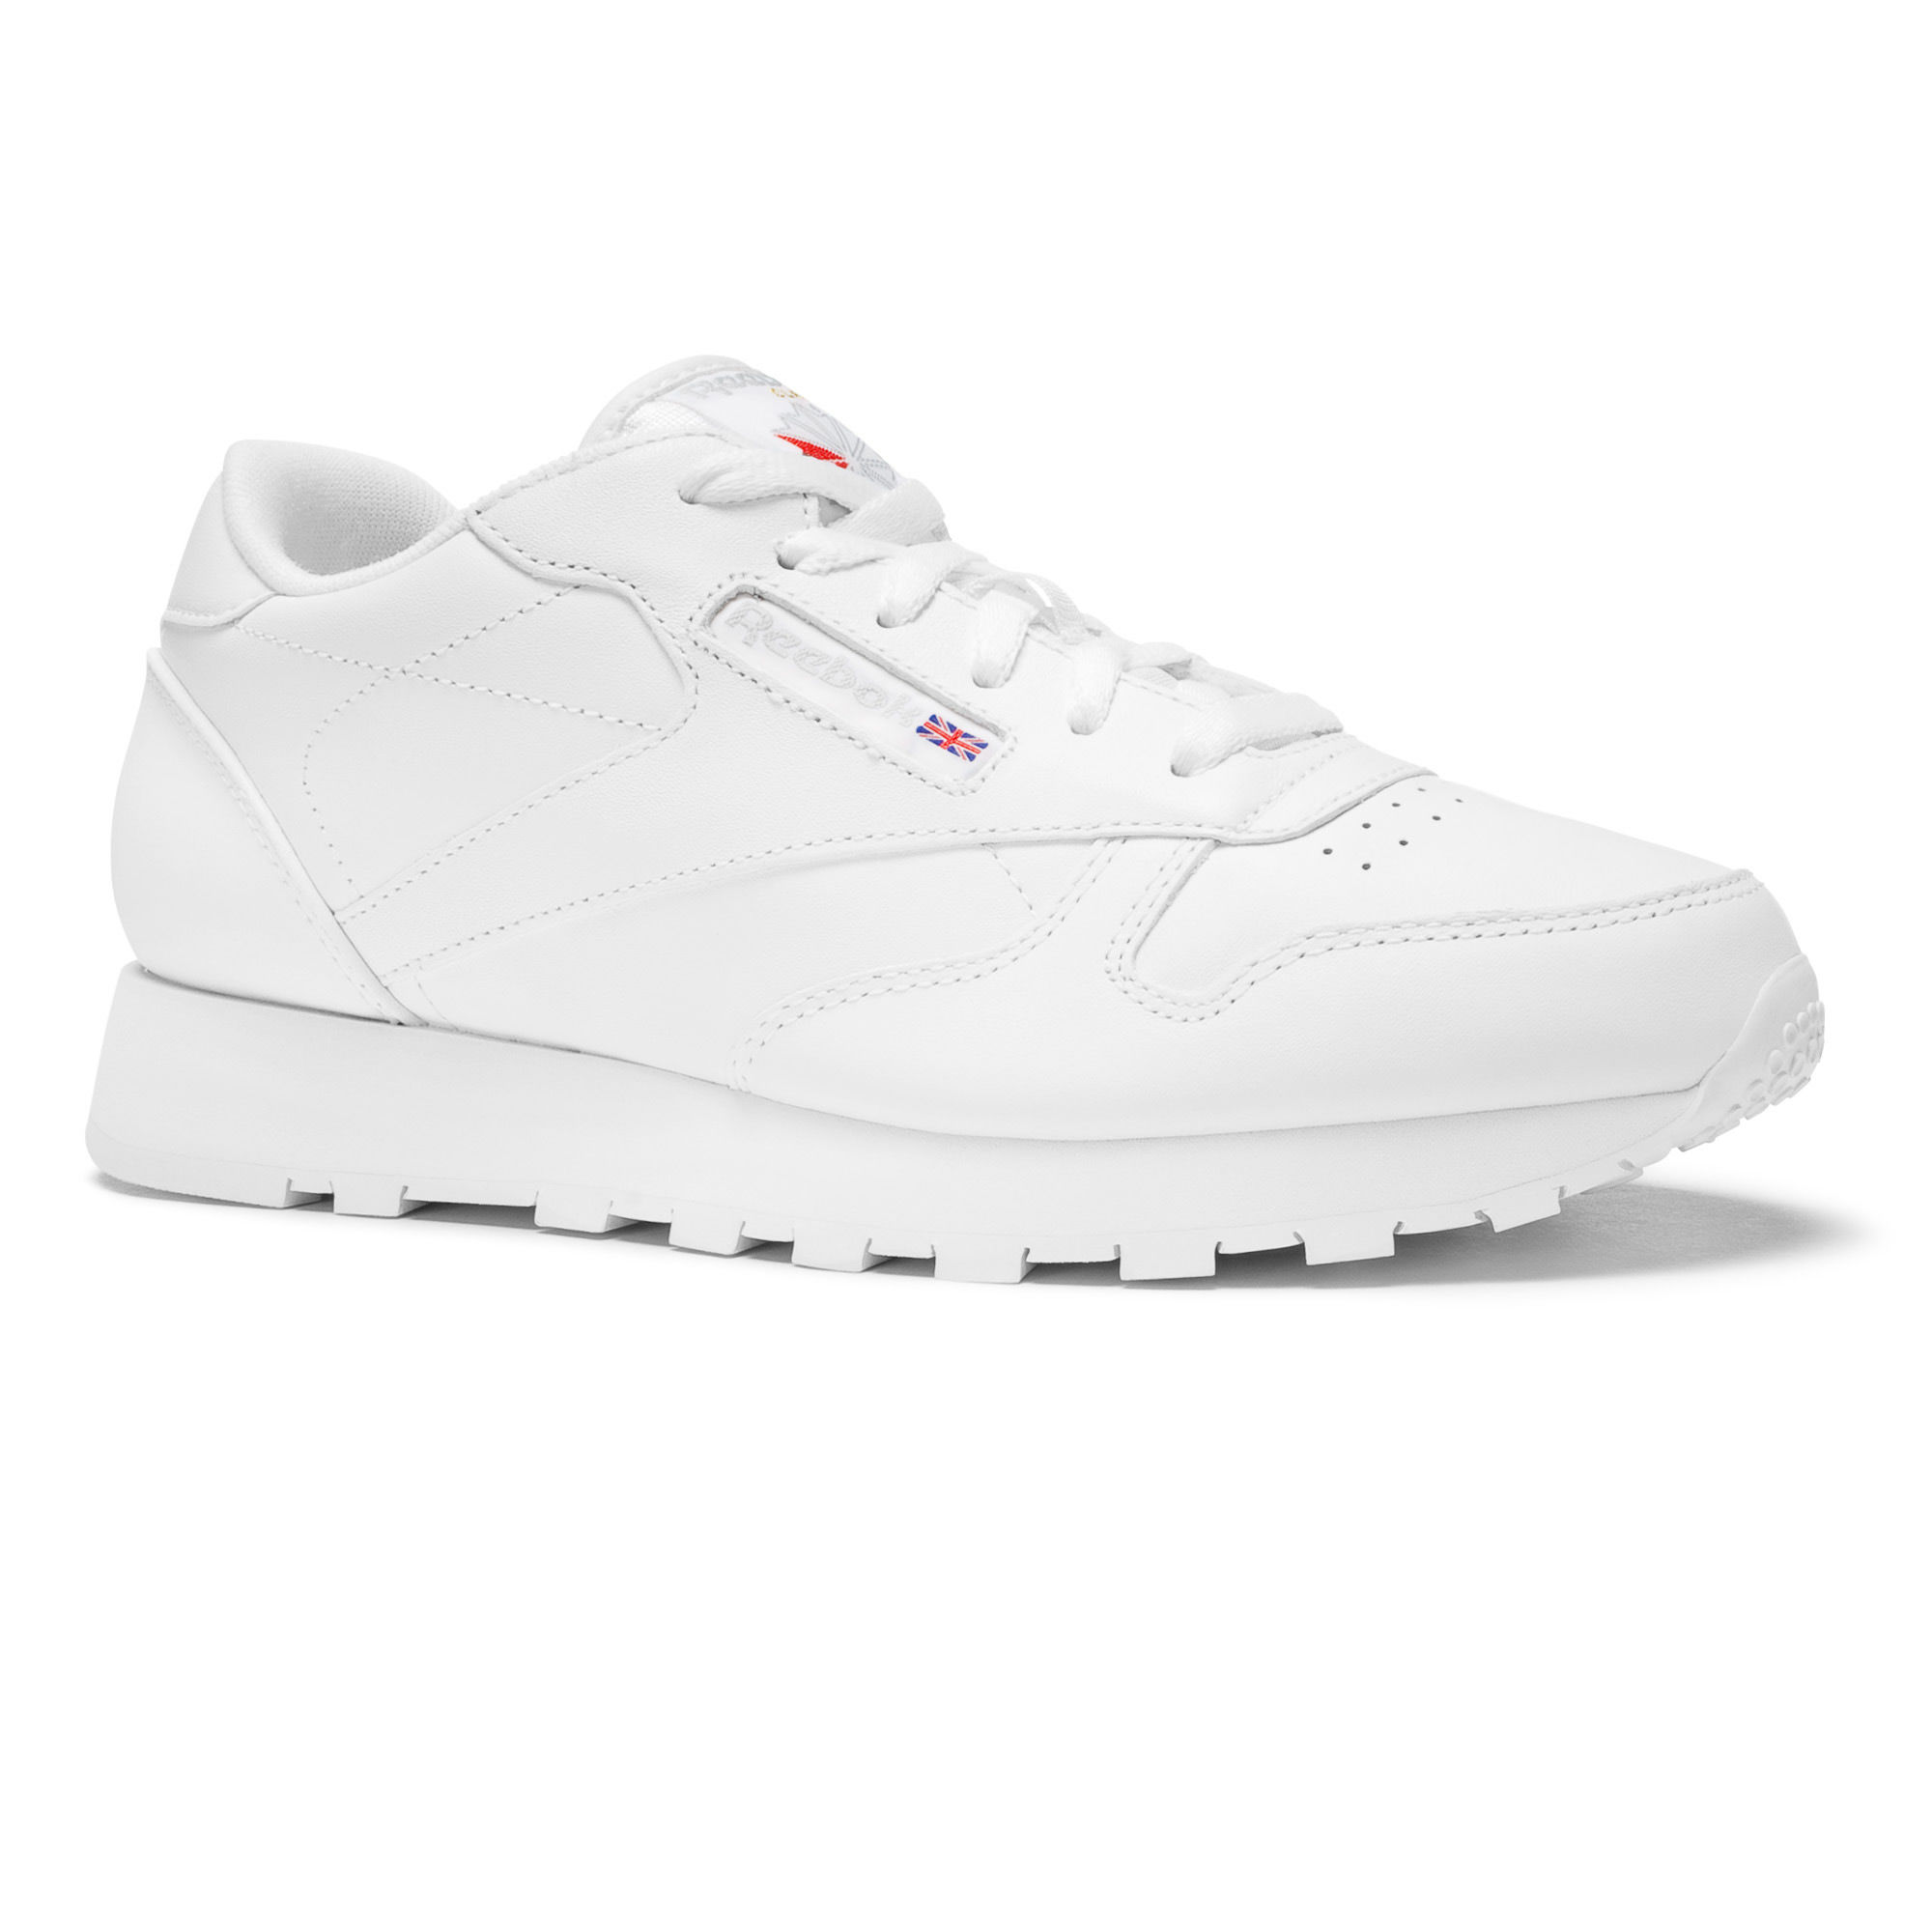 Pantofi sport piele Reebok Classic Leather albi 50151 unisex copii